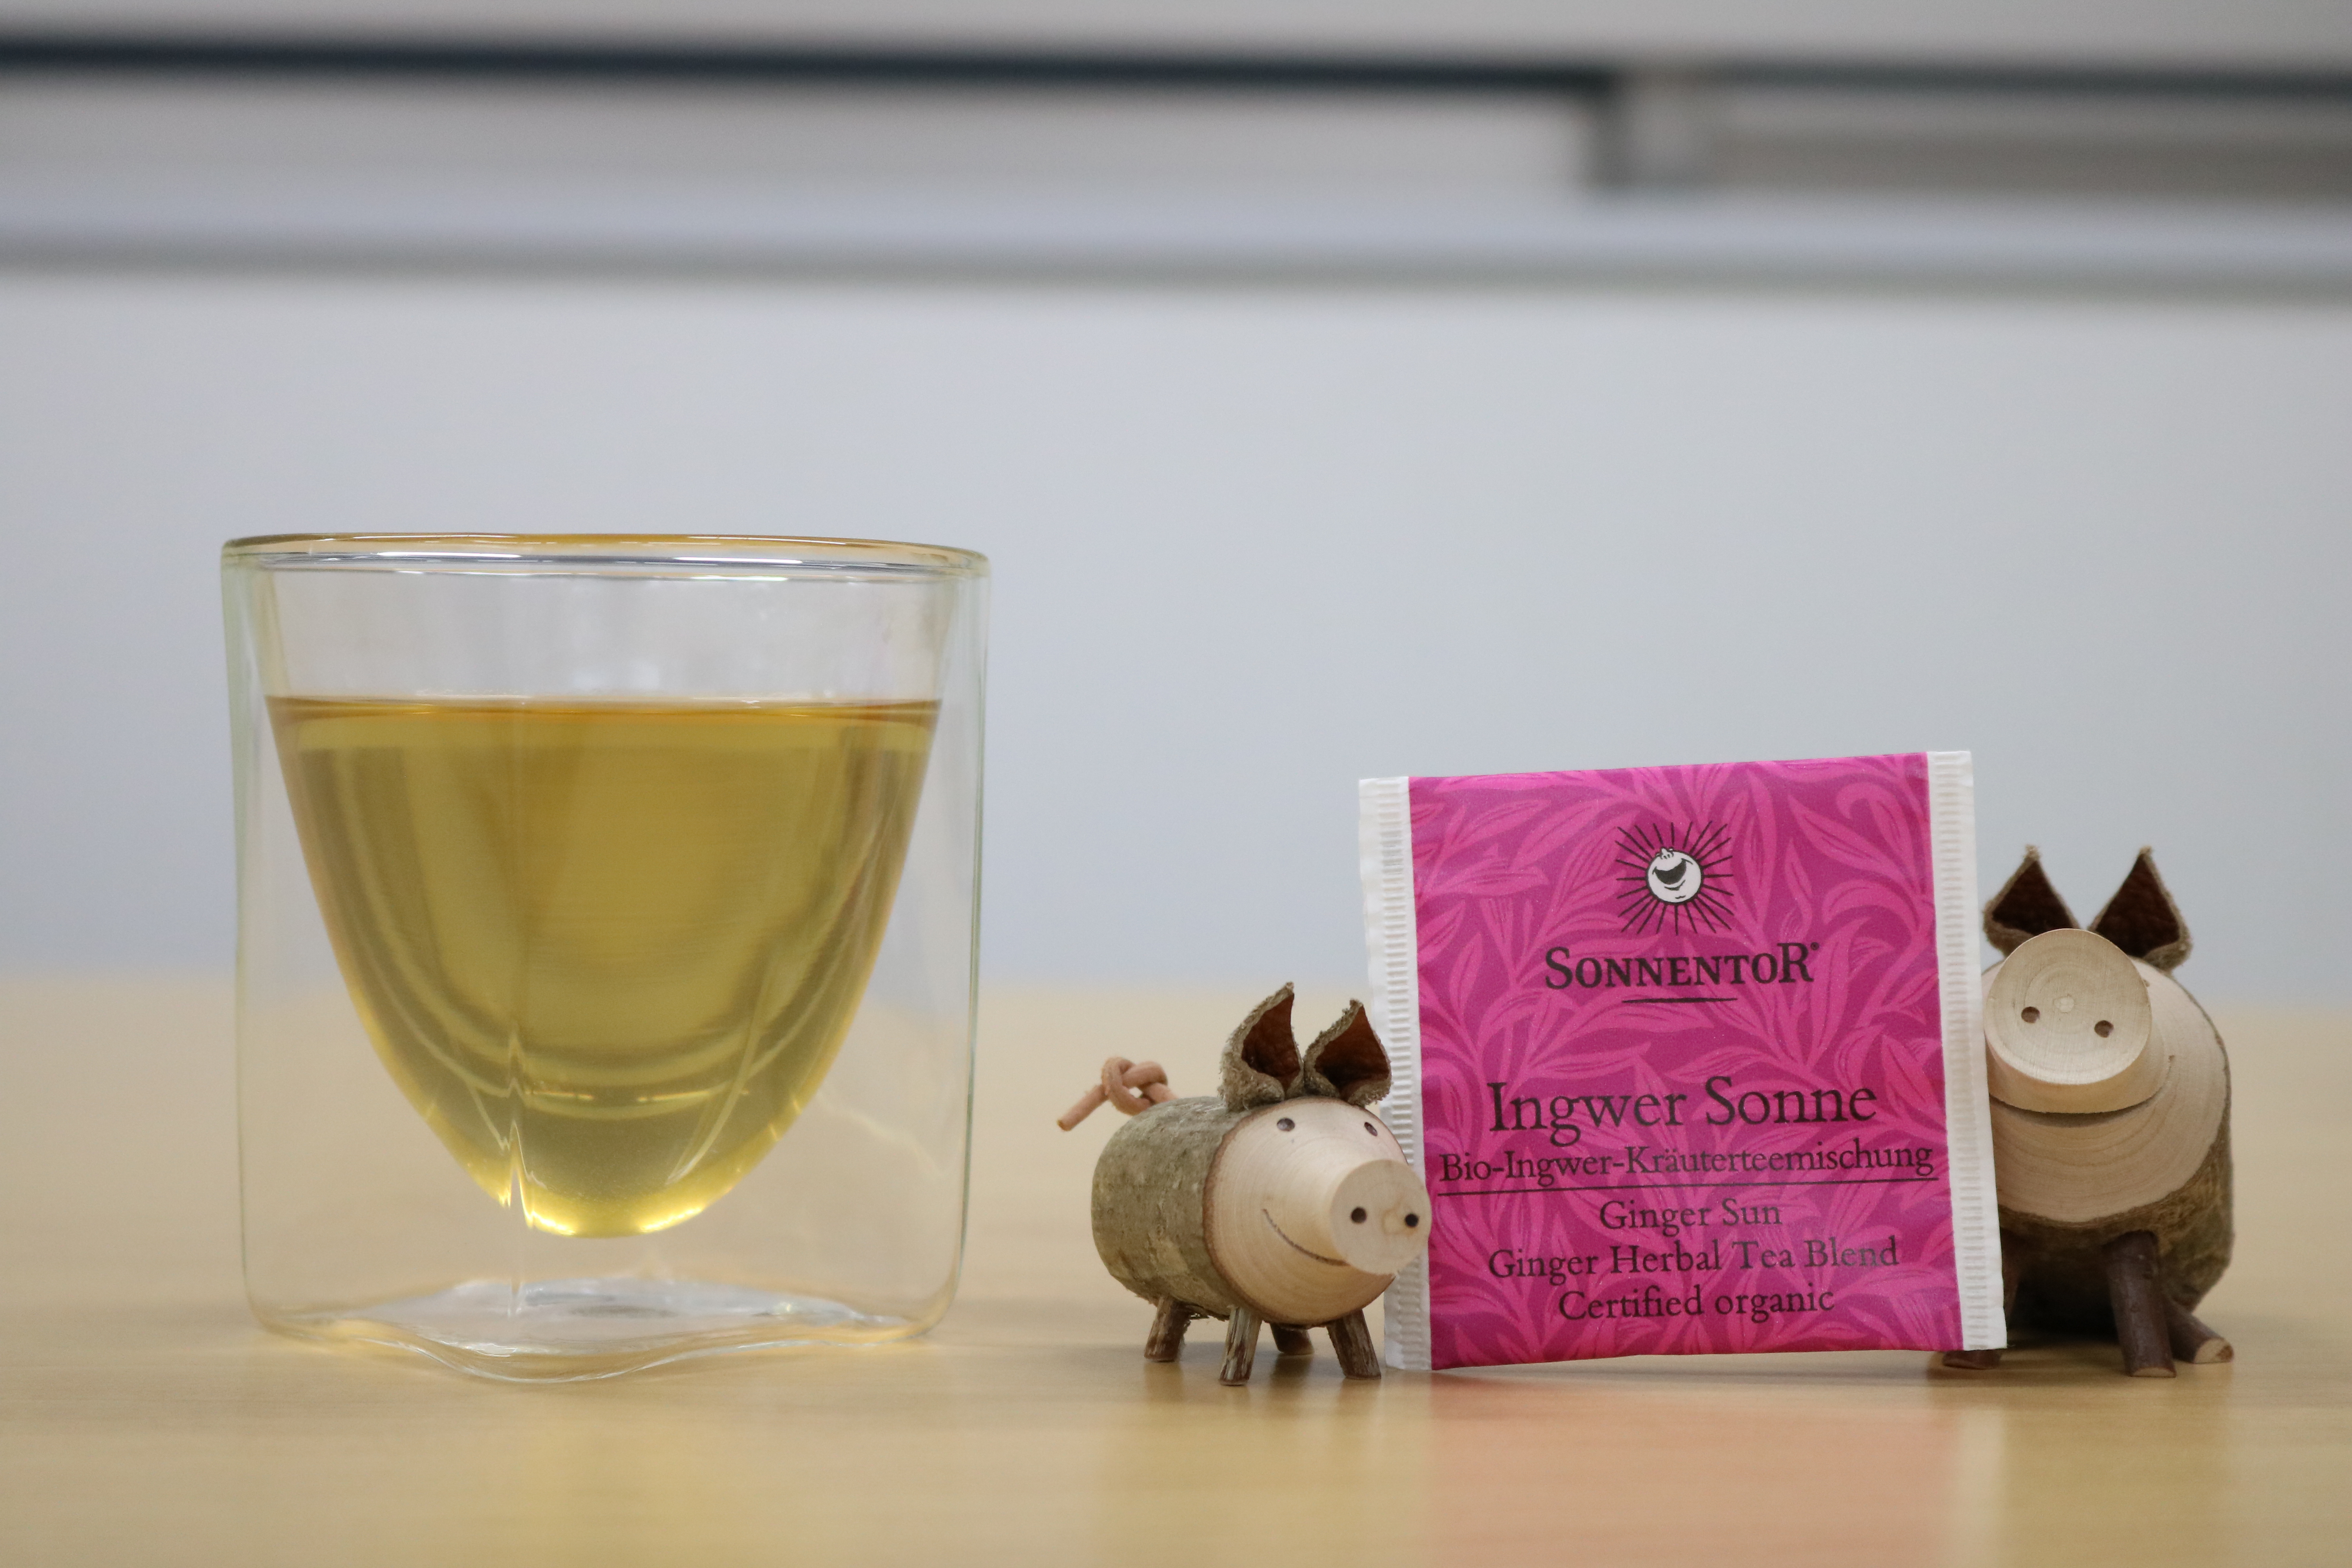 Ginger Sun Herbal Tea